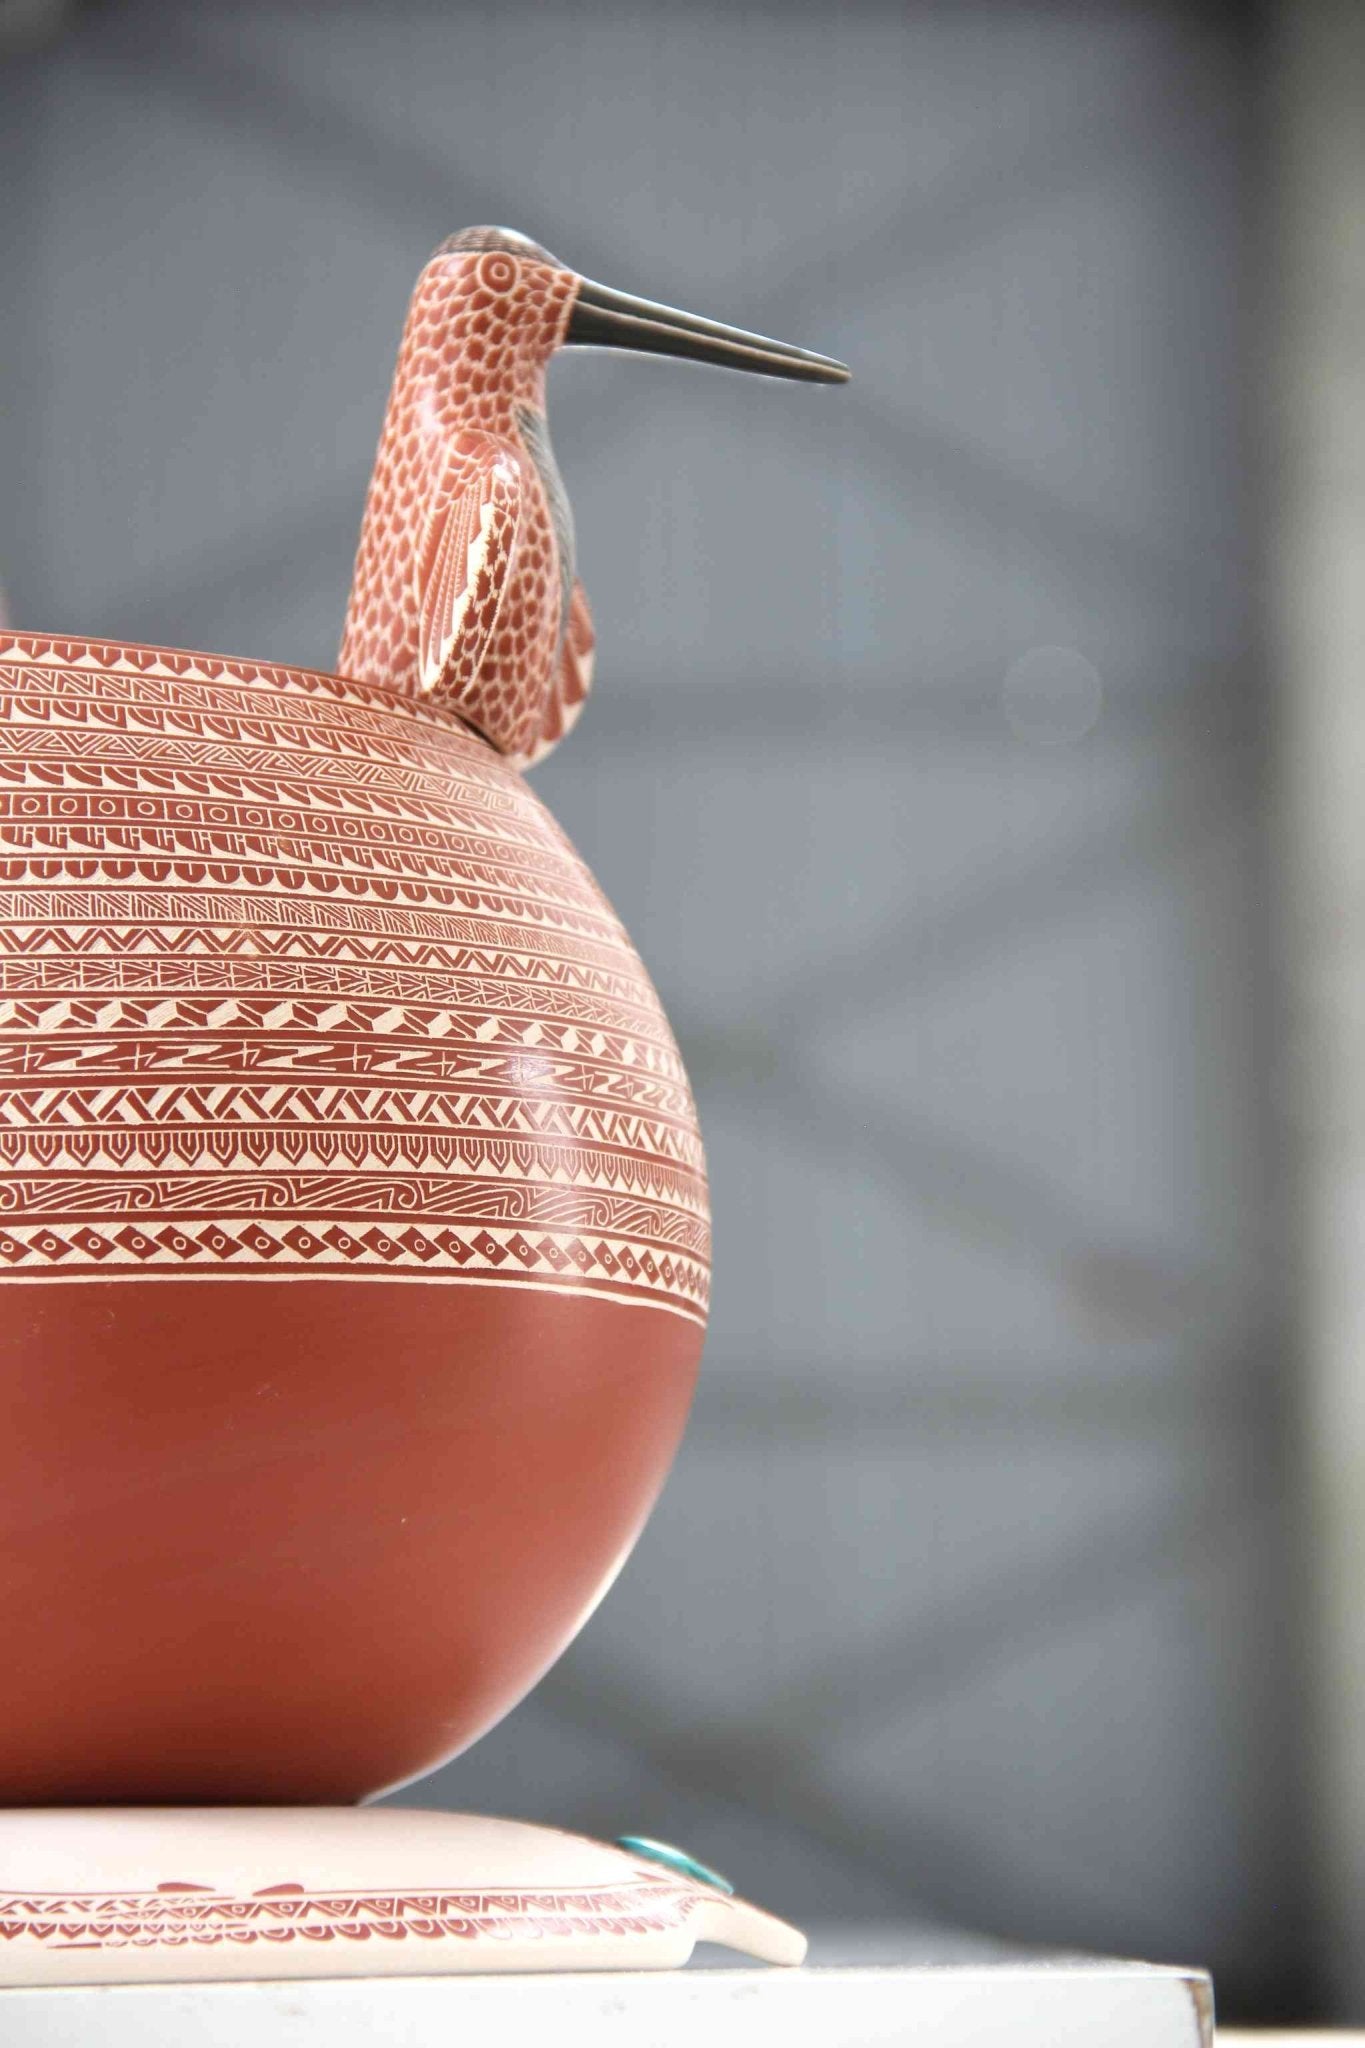 Ceramica Mata Ortiz - Colibrì - Arte Huichol - Marakame